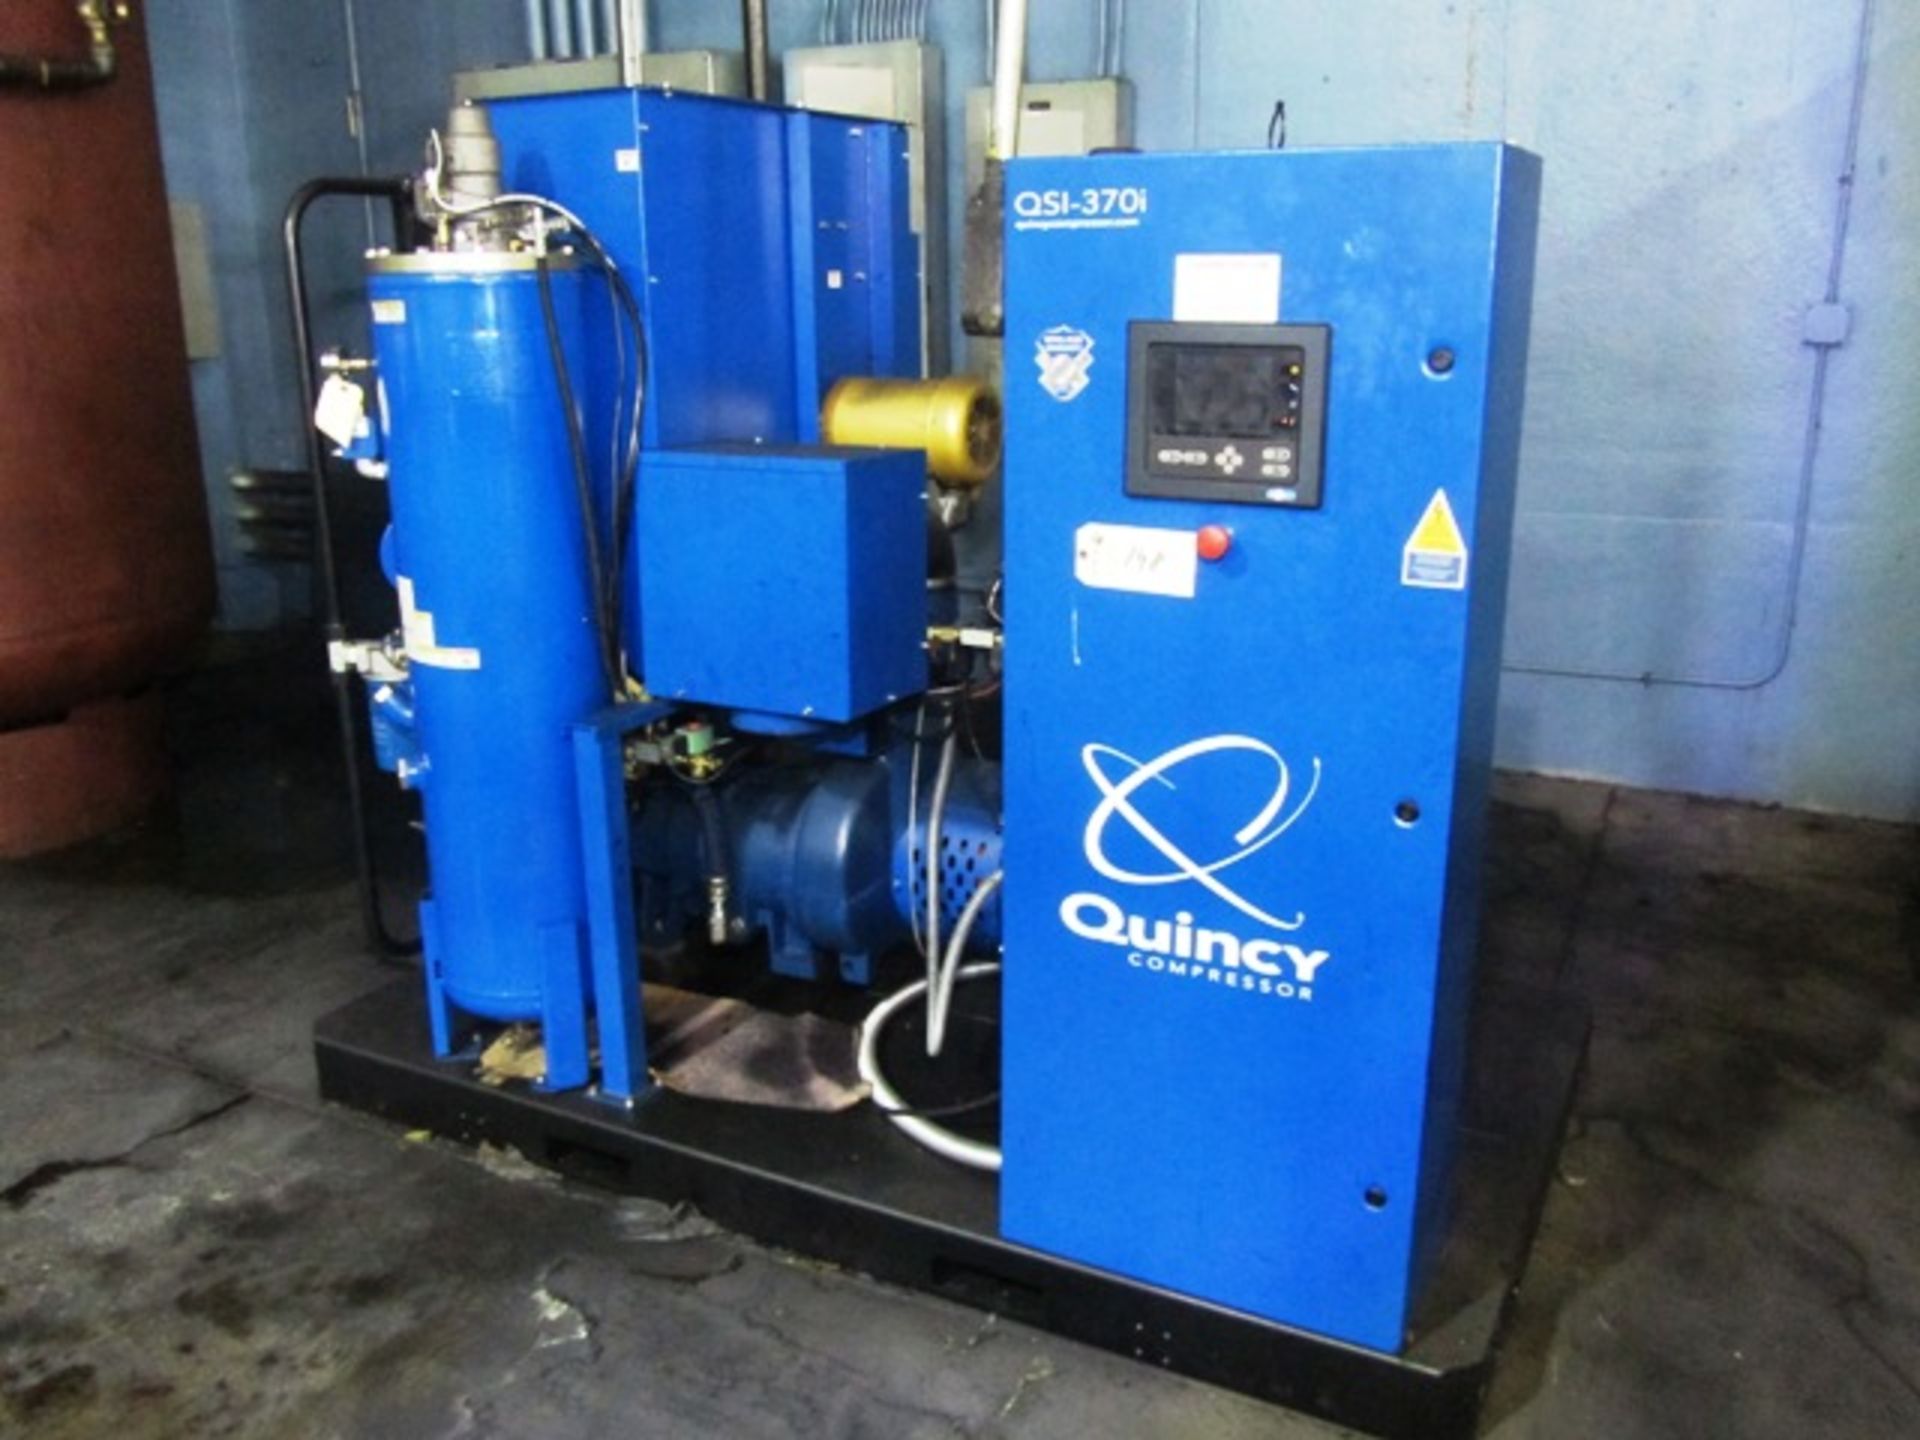 Quincy Model QSI-370i 100 HP Rotary Screw Air Compressor